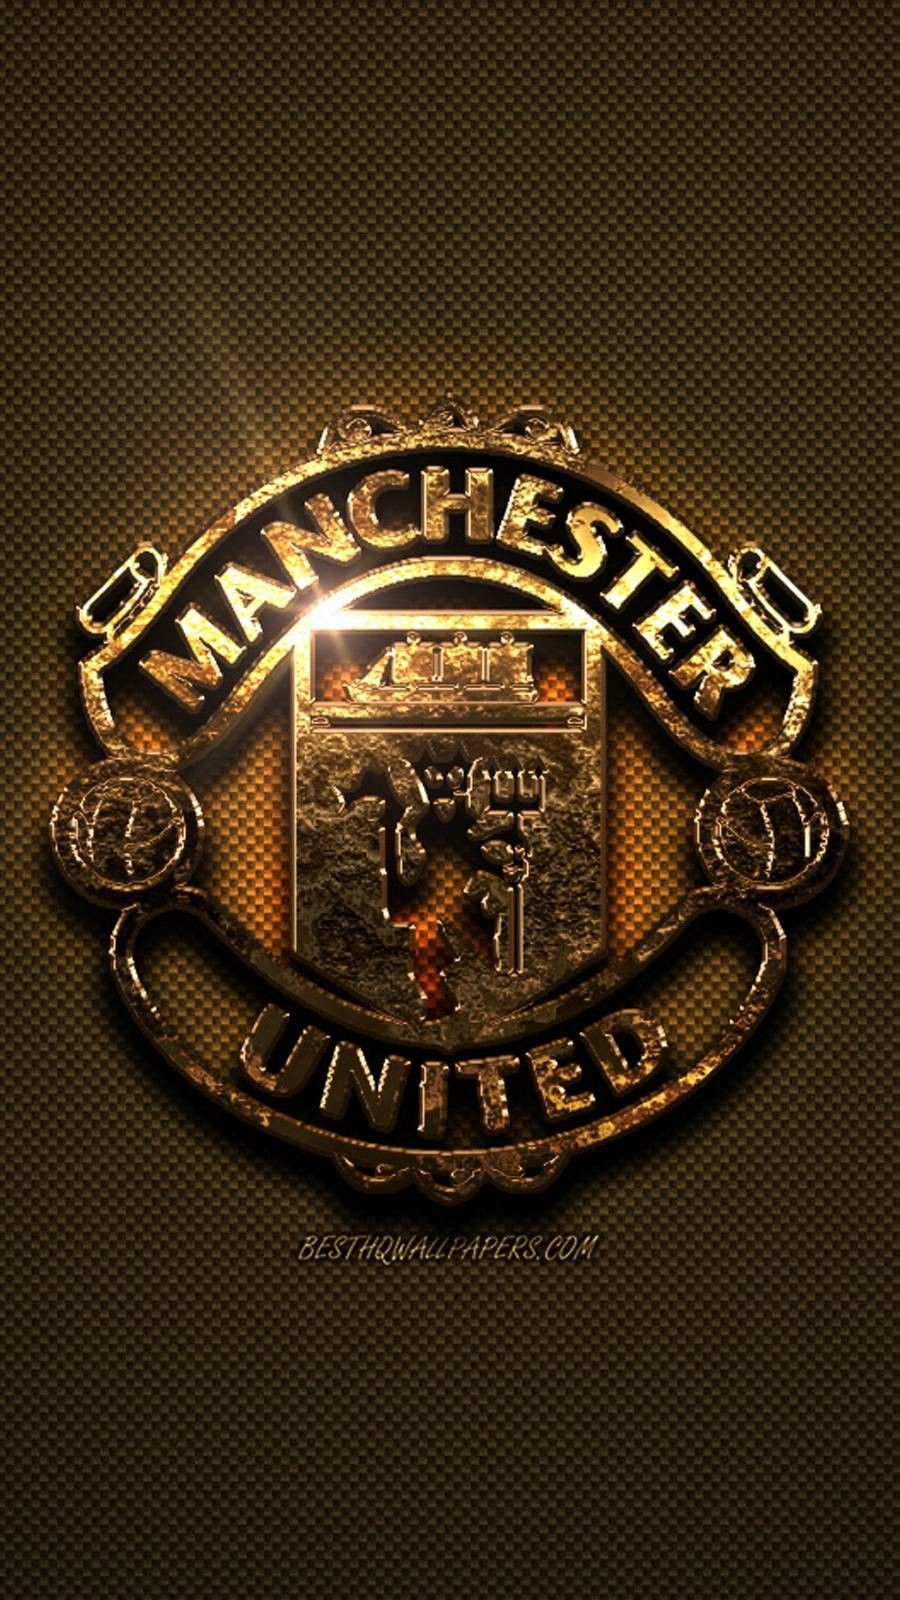 Man Utd gold club crest wallpaper. Manchester united wallpaper